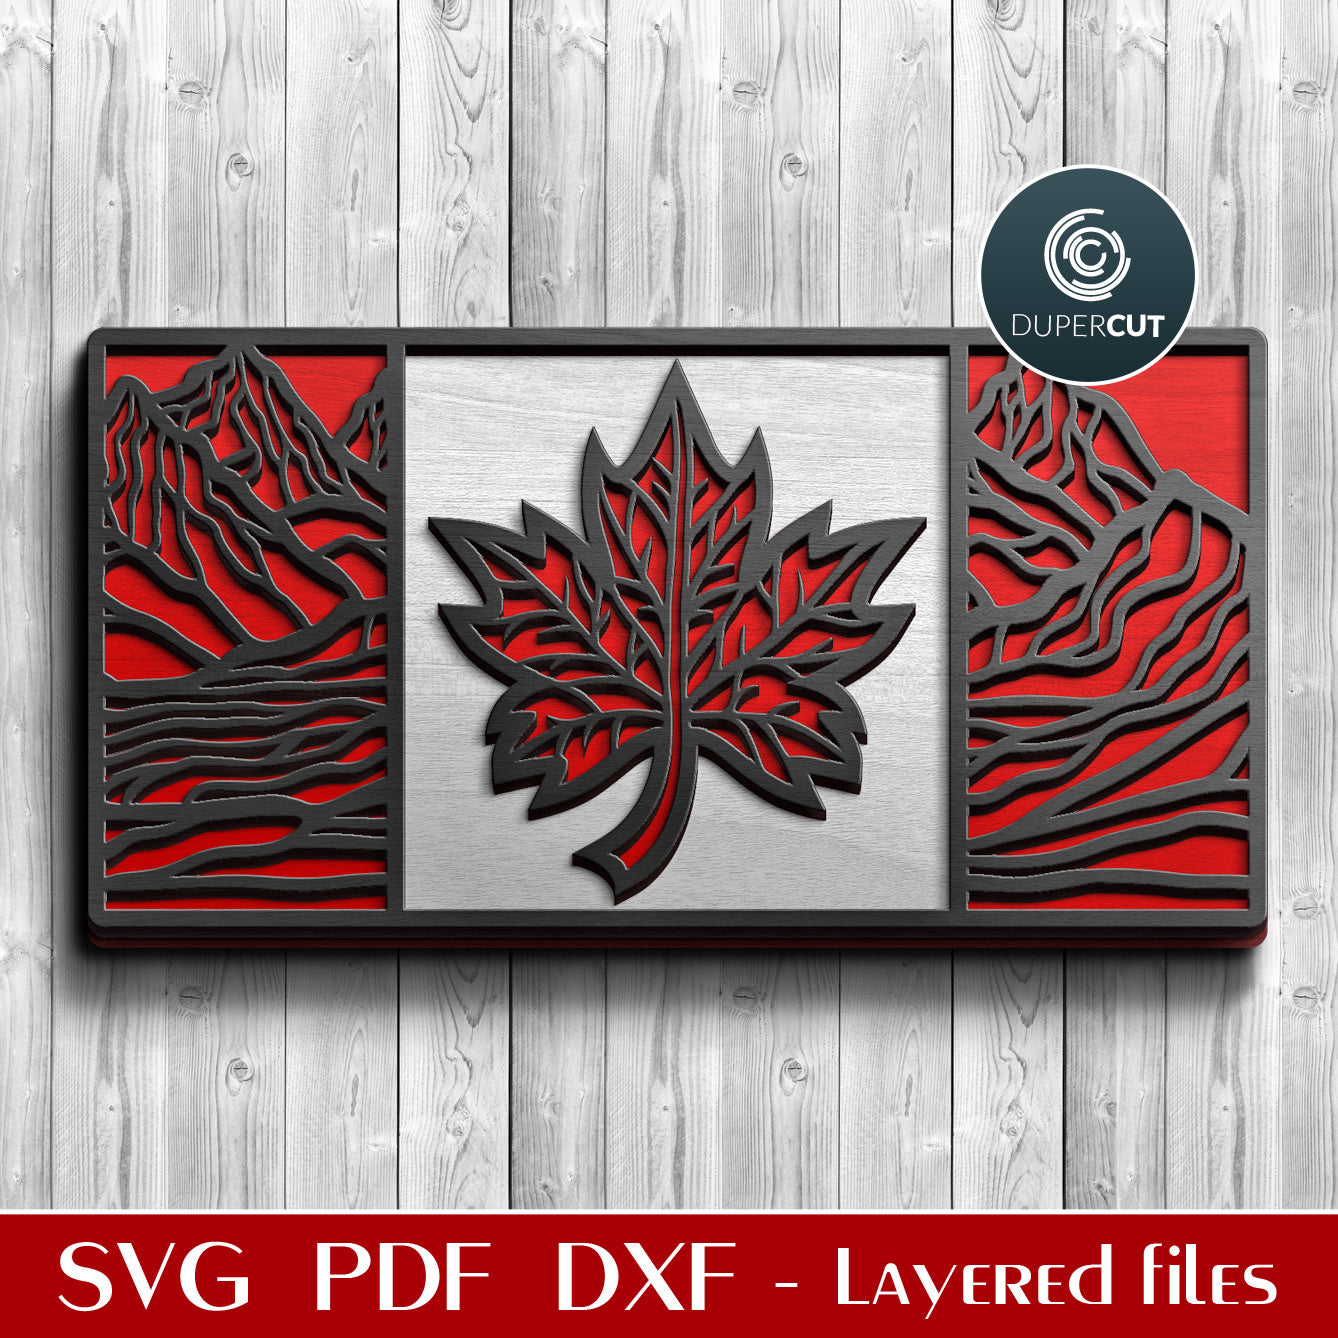 Maple leaf flag of Canada - SVG DXF layered cut files for laser and digital machines Glowforge, Cricut, Xtool, CNC plasma, scroll saw pattern by www.DuperCut.com